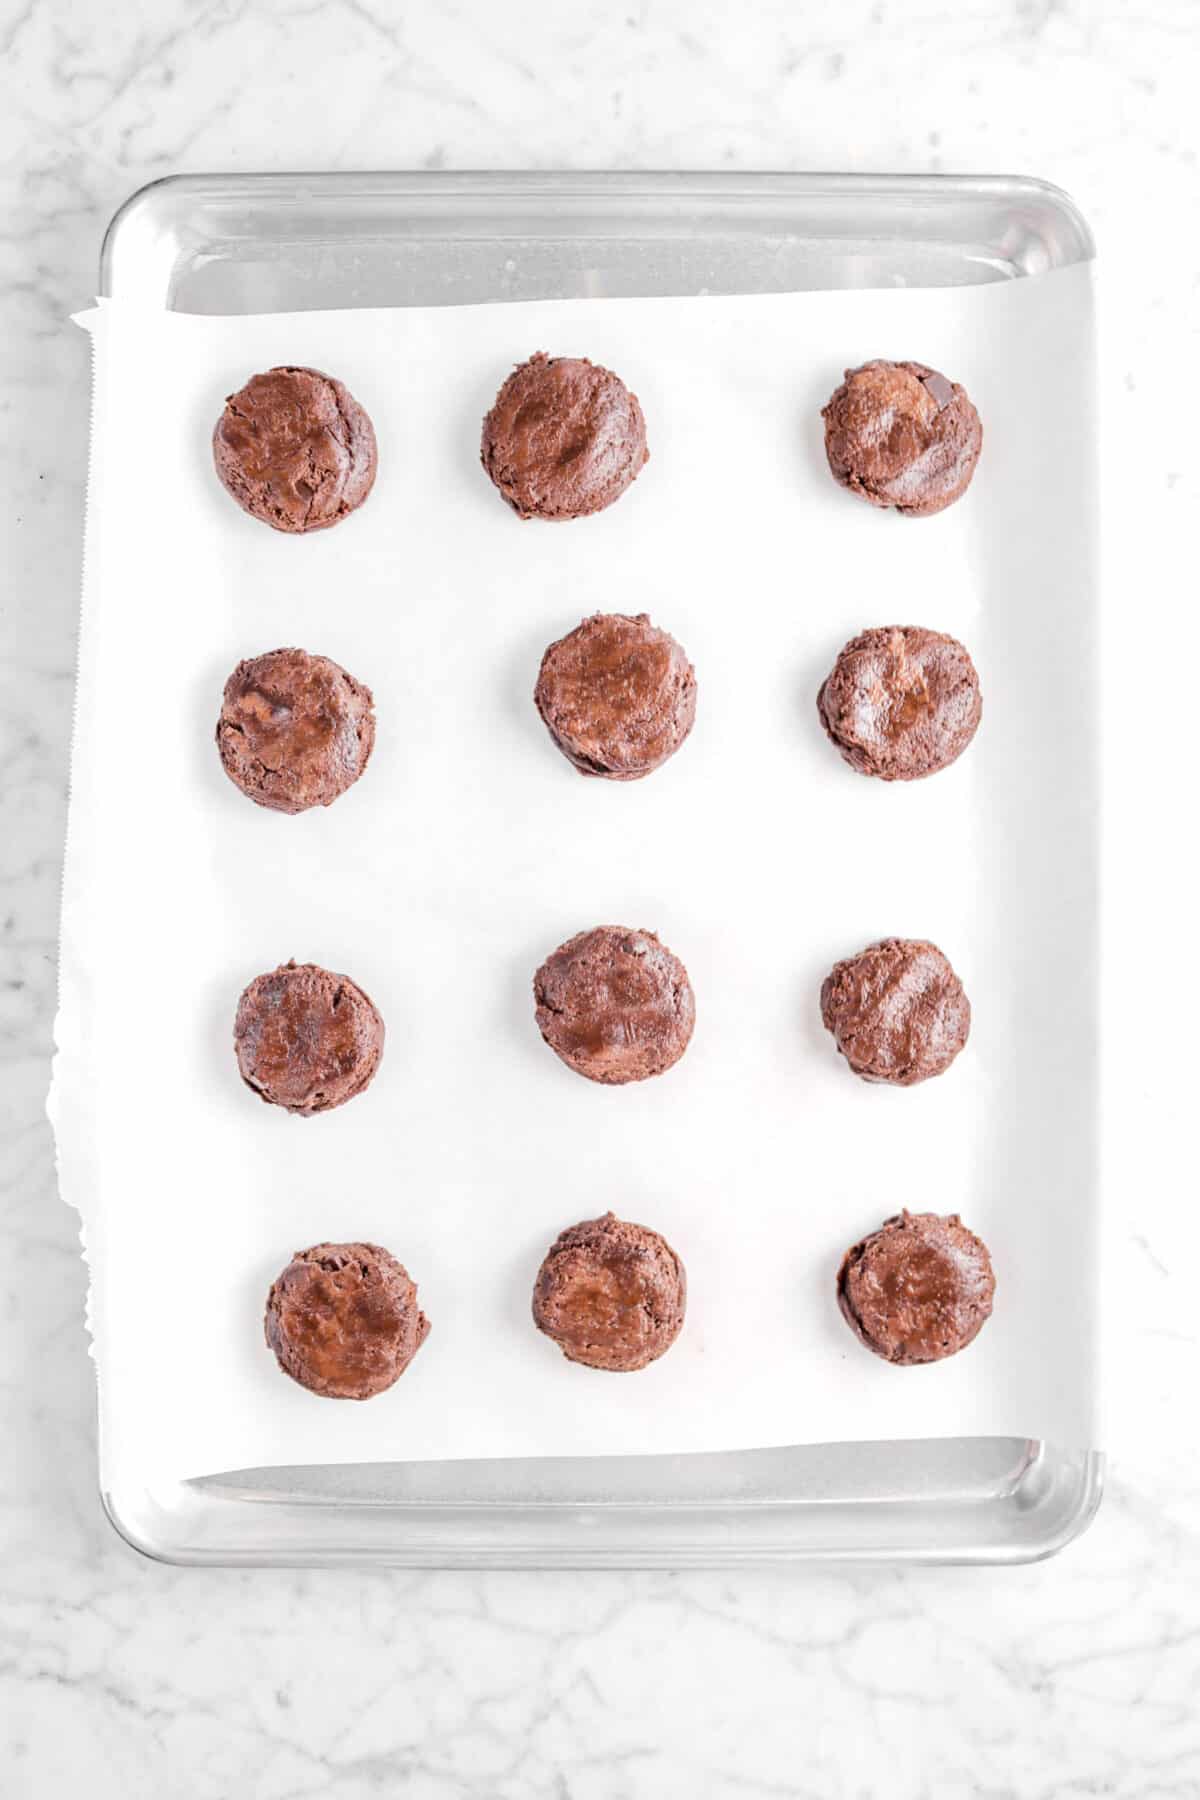 Twelve unbaked cookies on a baking sheet